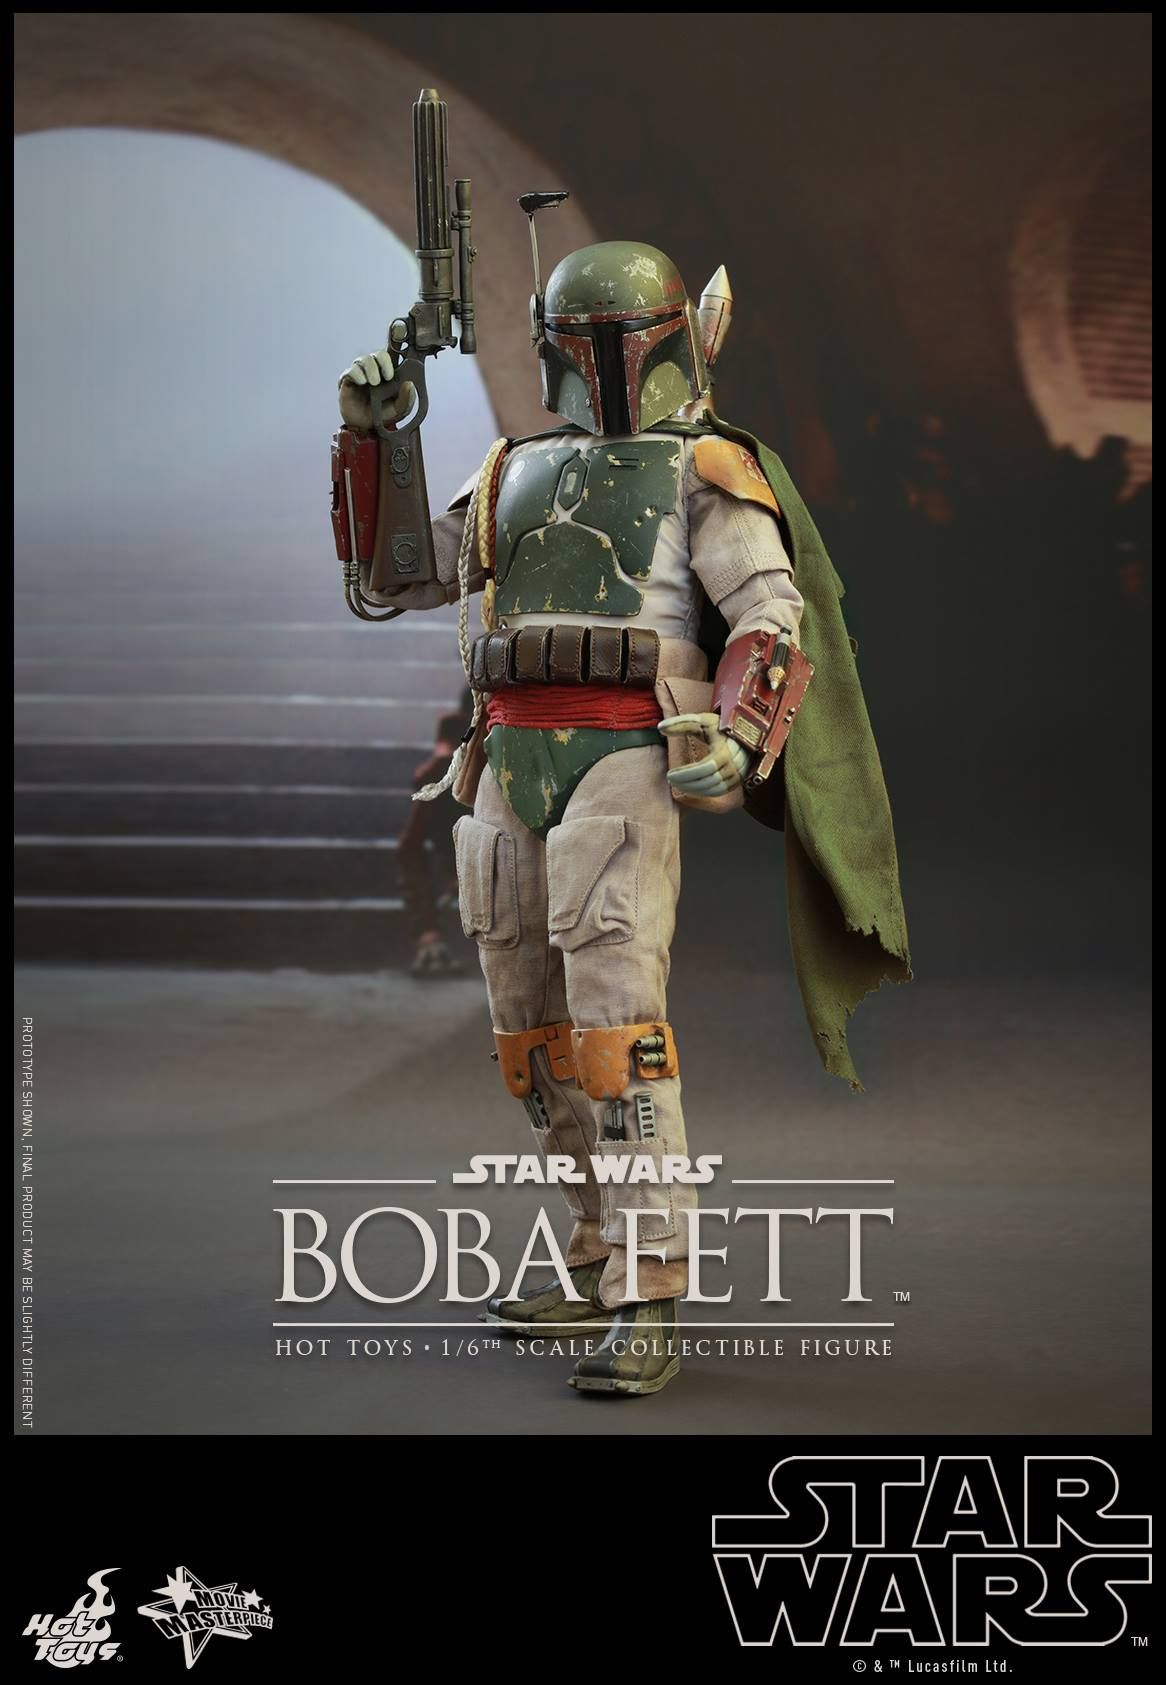 Star Wars Boba Fett Hot Toys Deluxe Figure Is Here